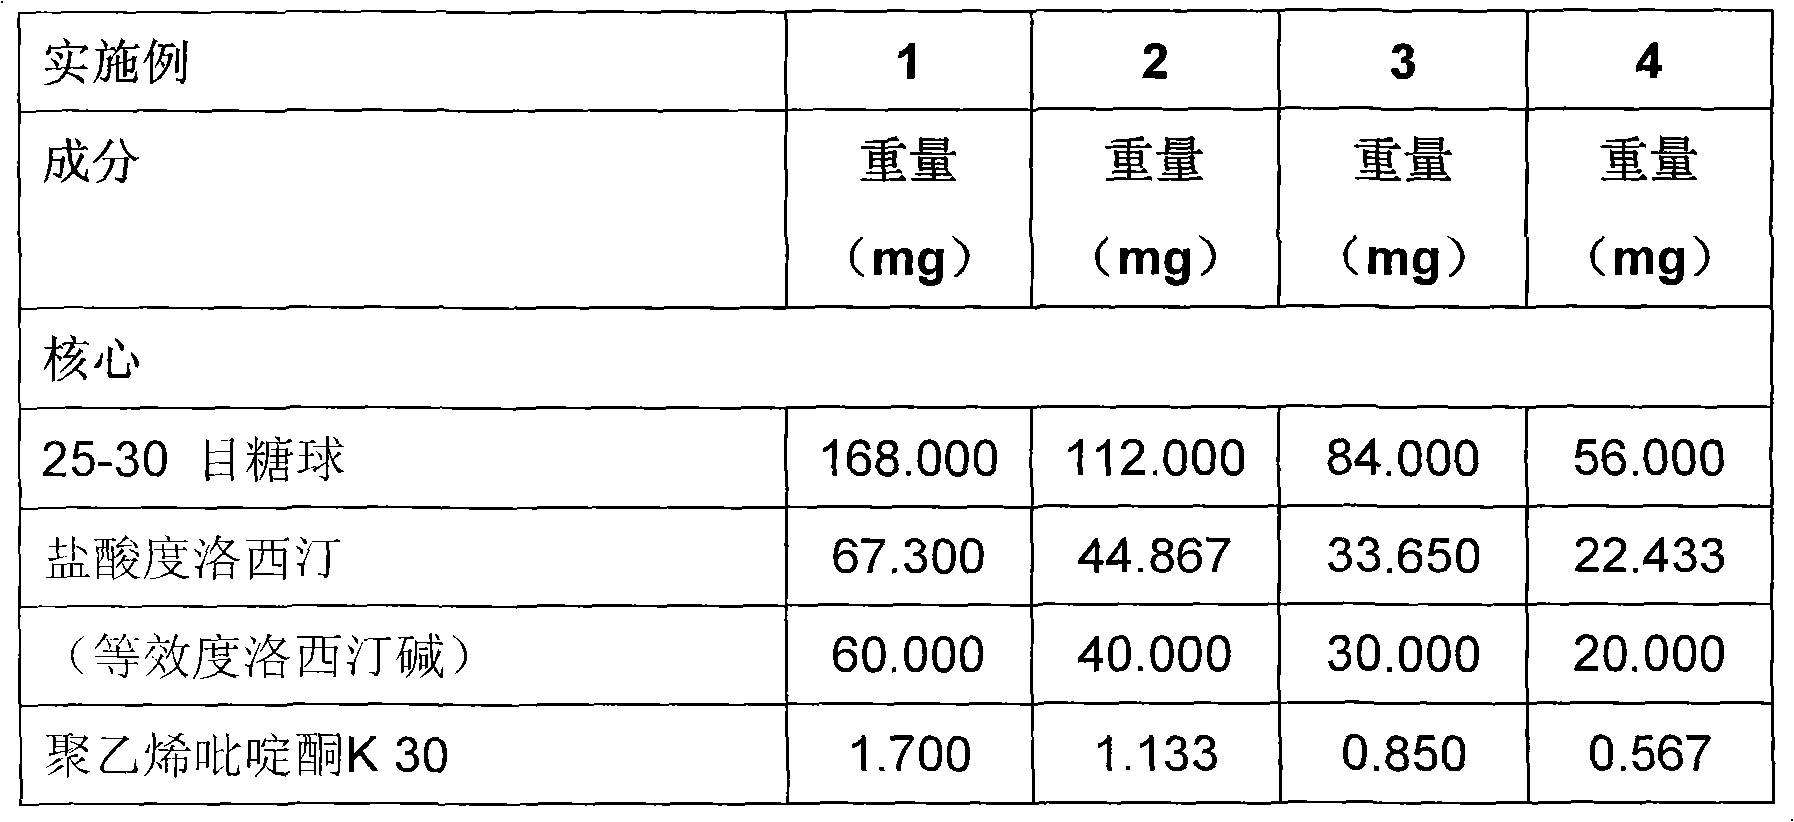 Duloxetine formulation